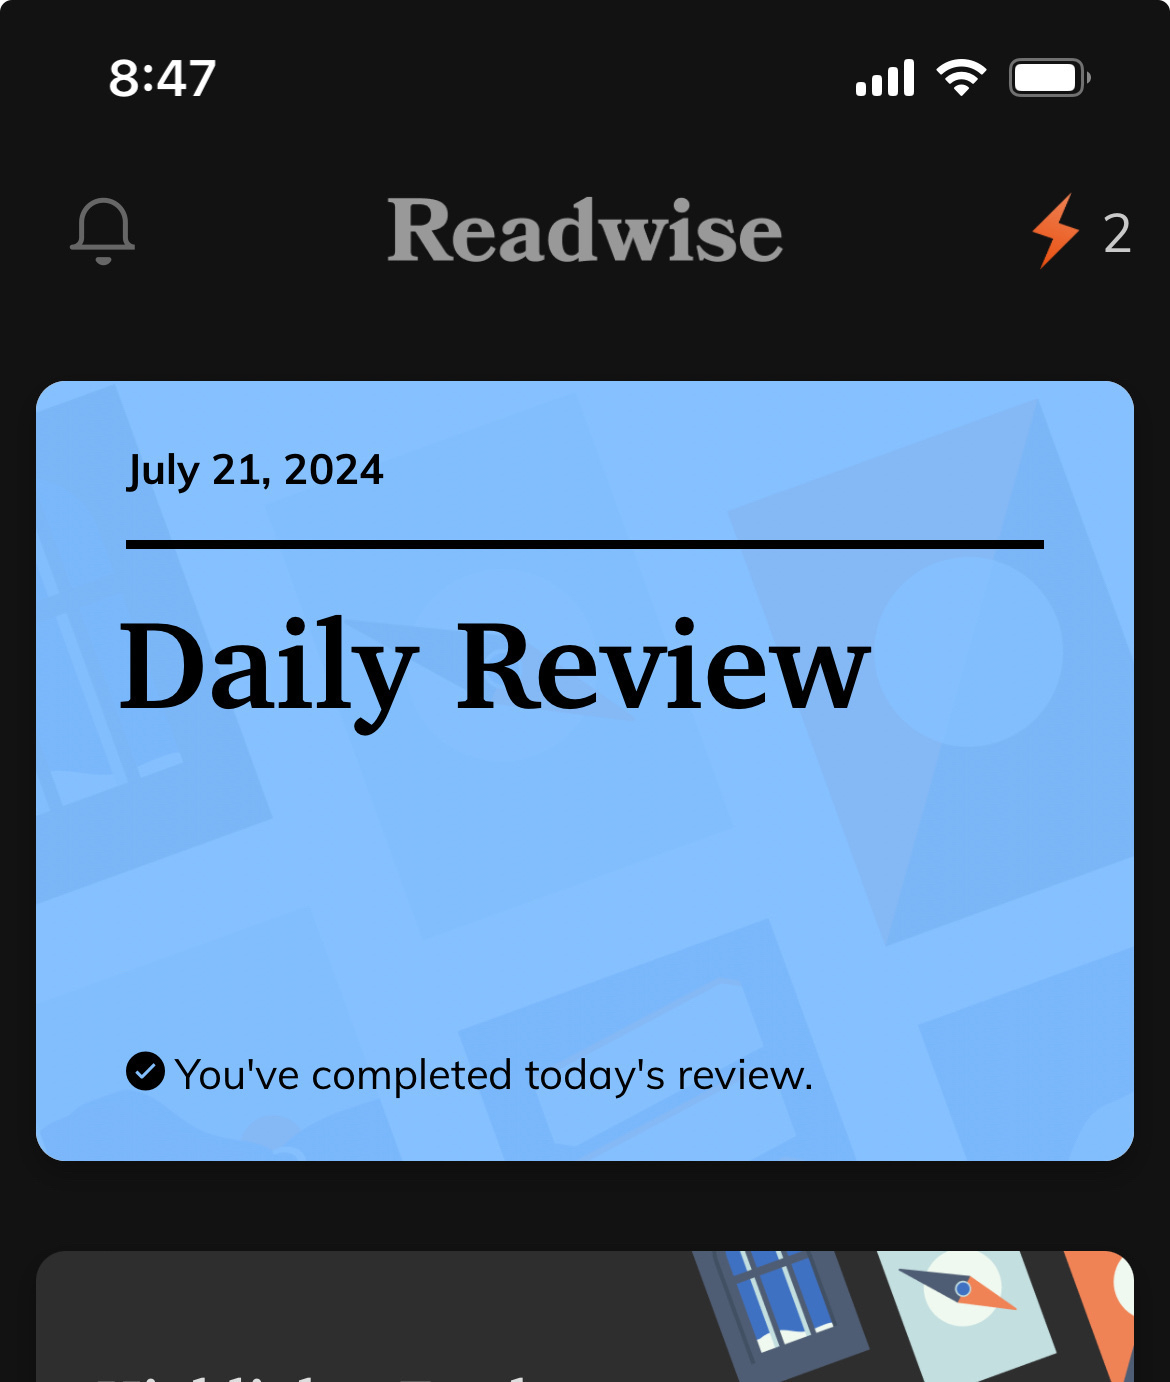 Readwise app screenshot showing a 2 day streak instead of the 322 day streak I had. 